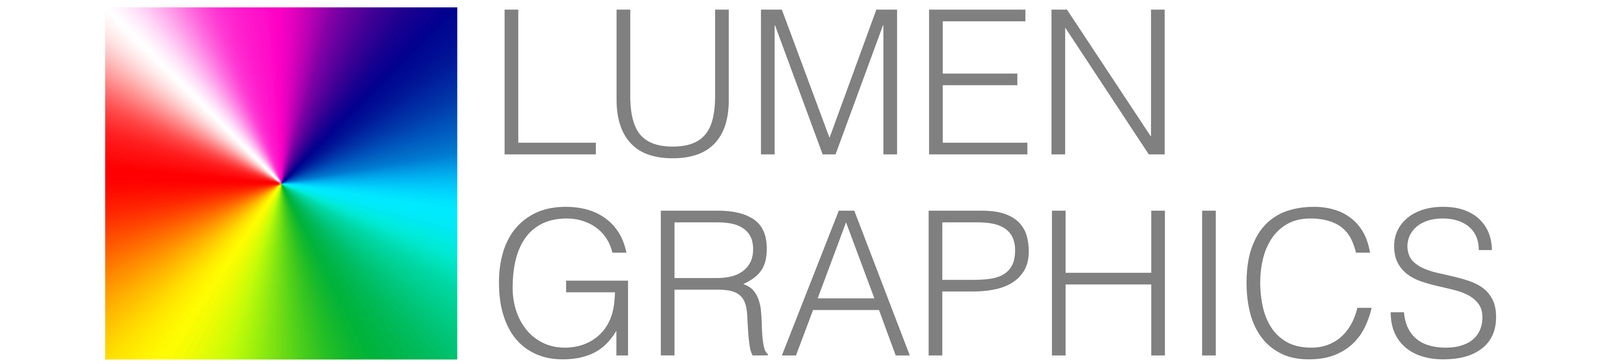 Lumen Graphics logo